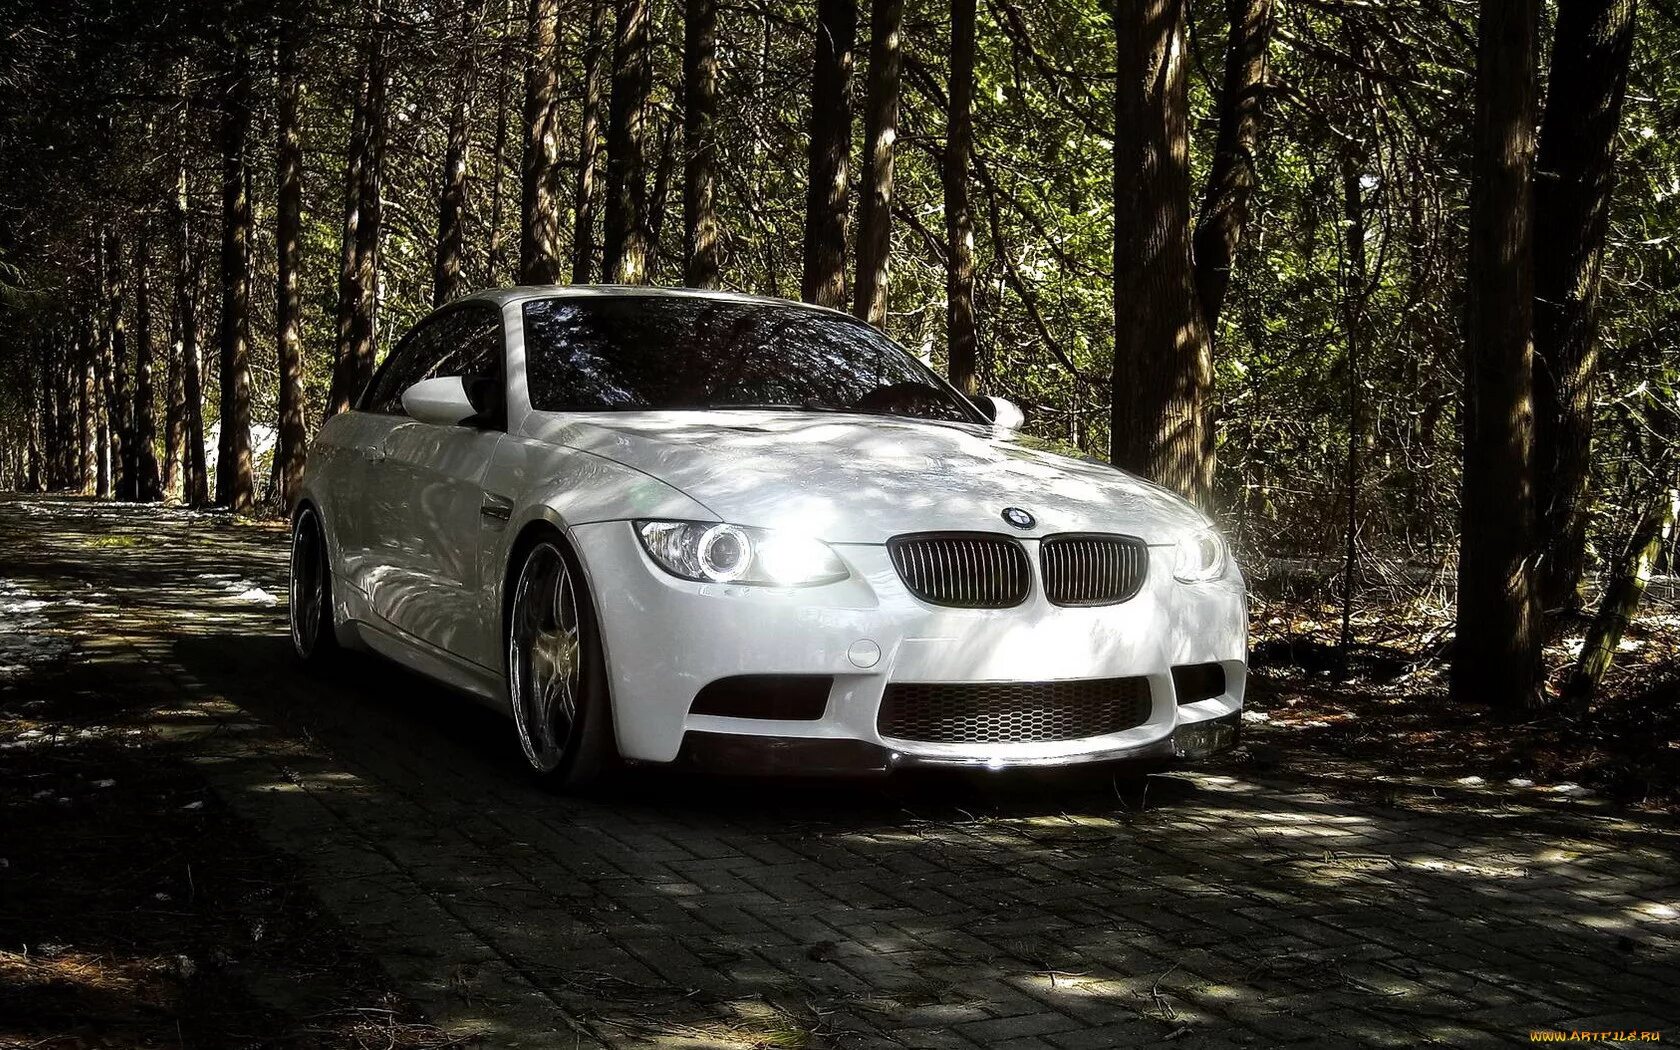 Капот в лесу. БМВ м3. BMW m5 e60. БМВ м5 в лесу. BMW m3 360 Forged.